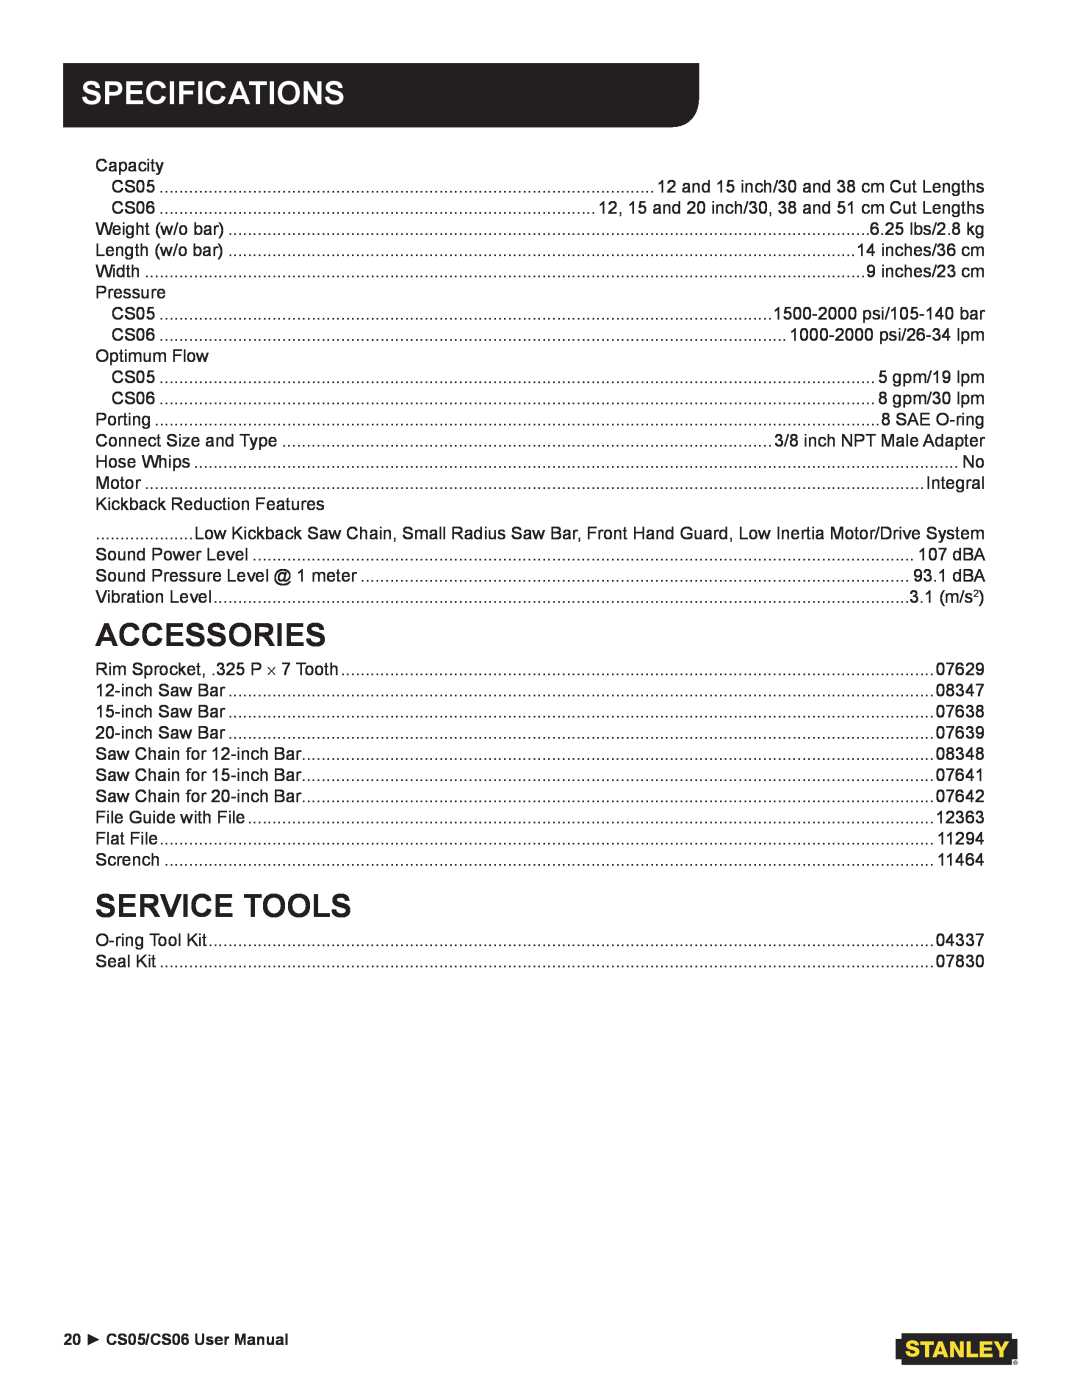 Stanley Black & Decker CS05/CS06 user manual Specifications, Accessories, Service Tools 